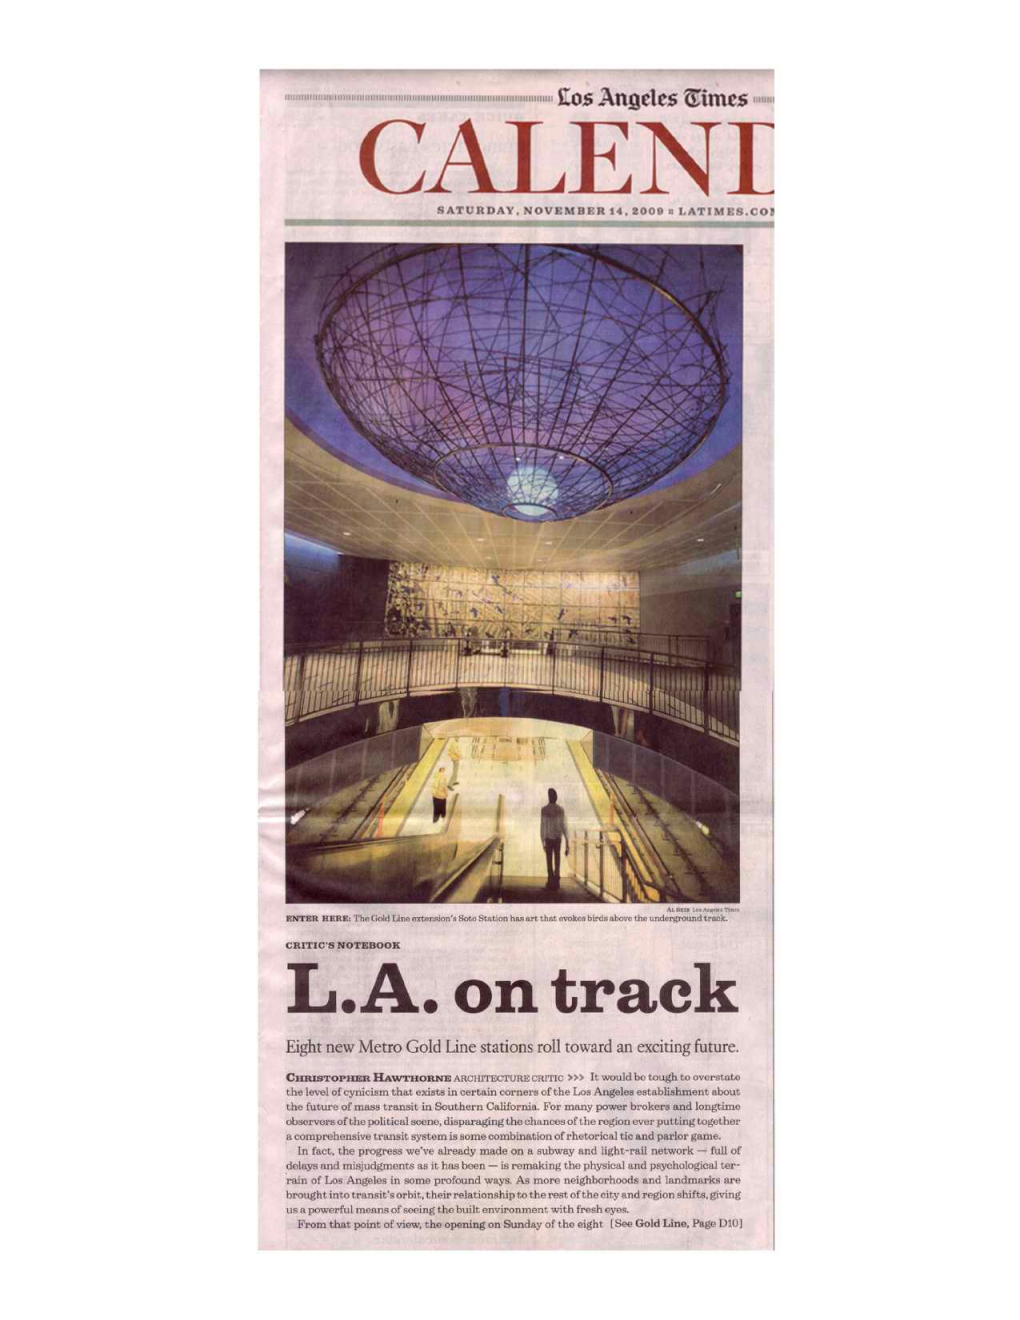 LA Times Article on Goldline Featuring Landings